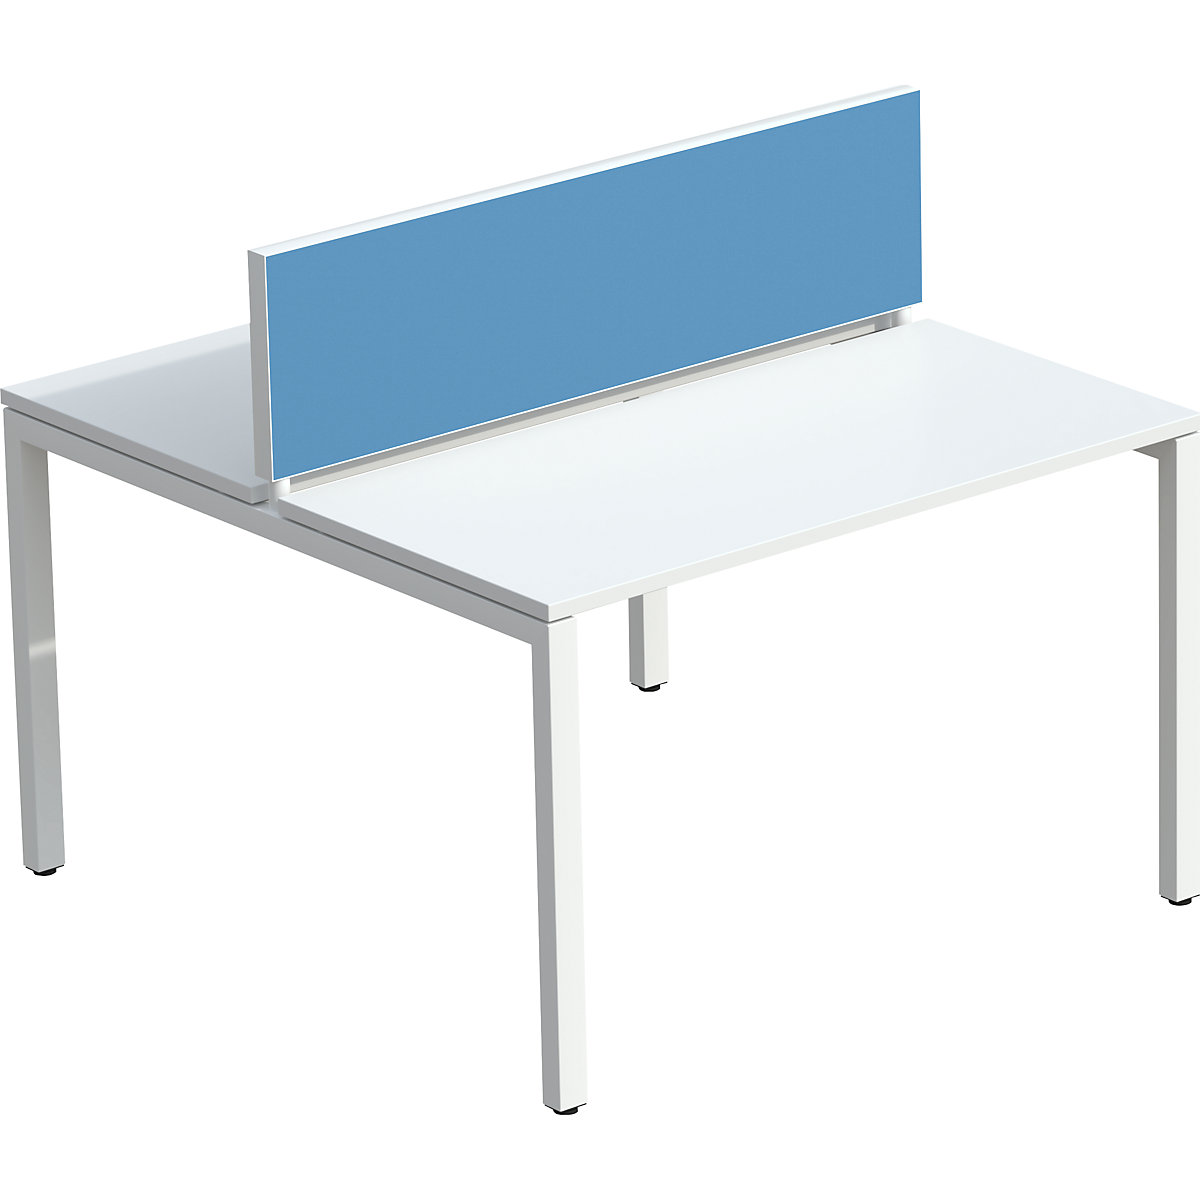 Table partition for team desks (Product illustration 14)-13